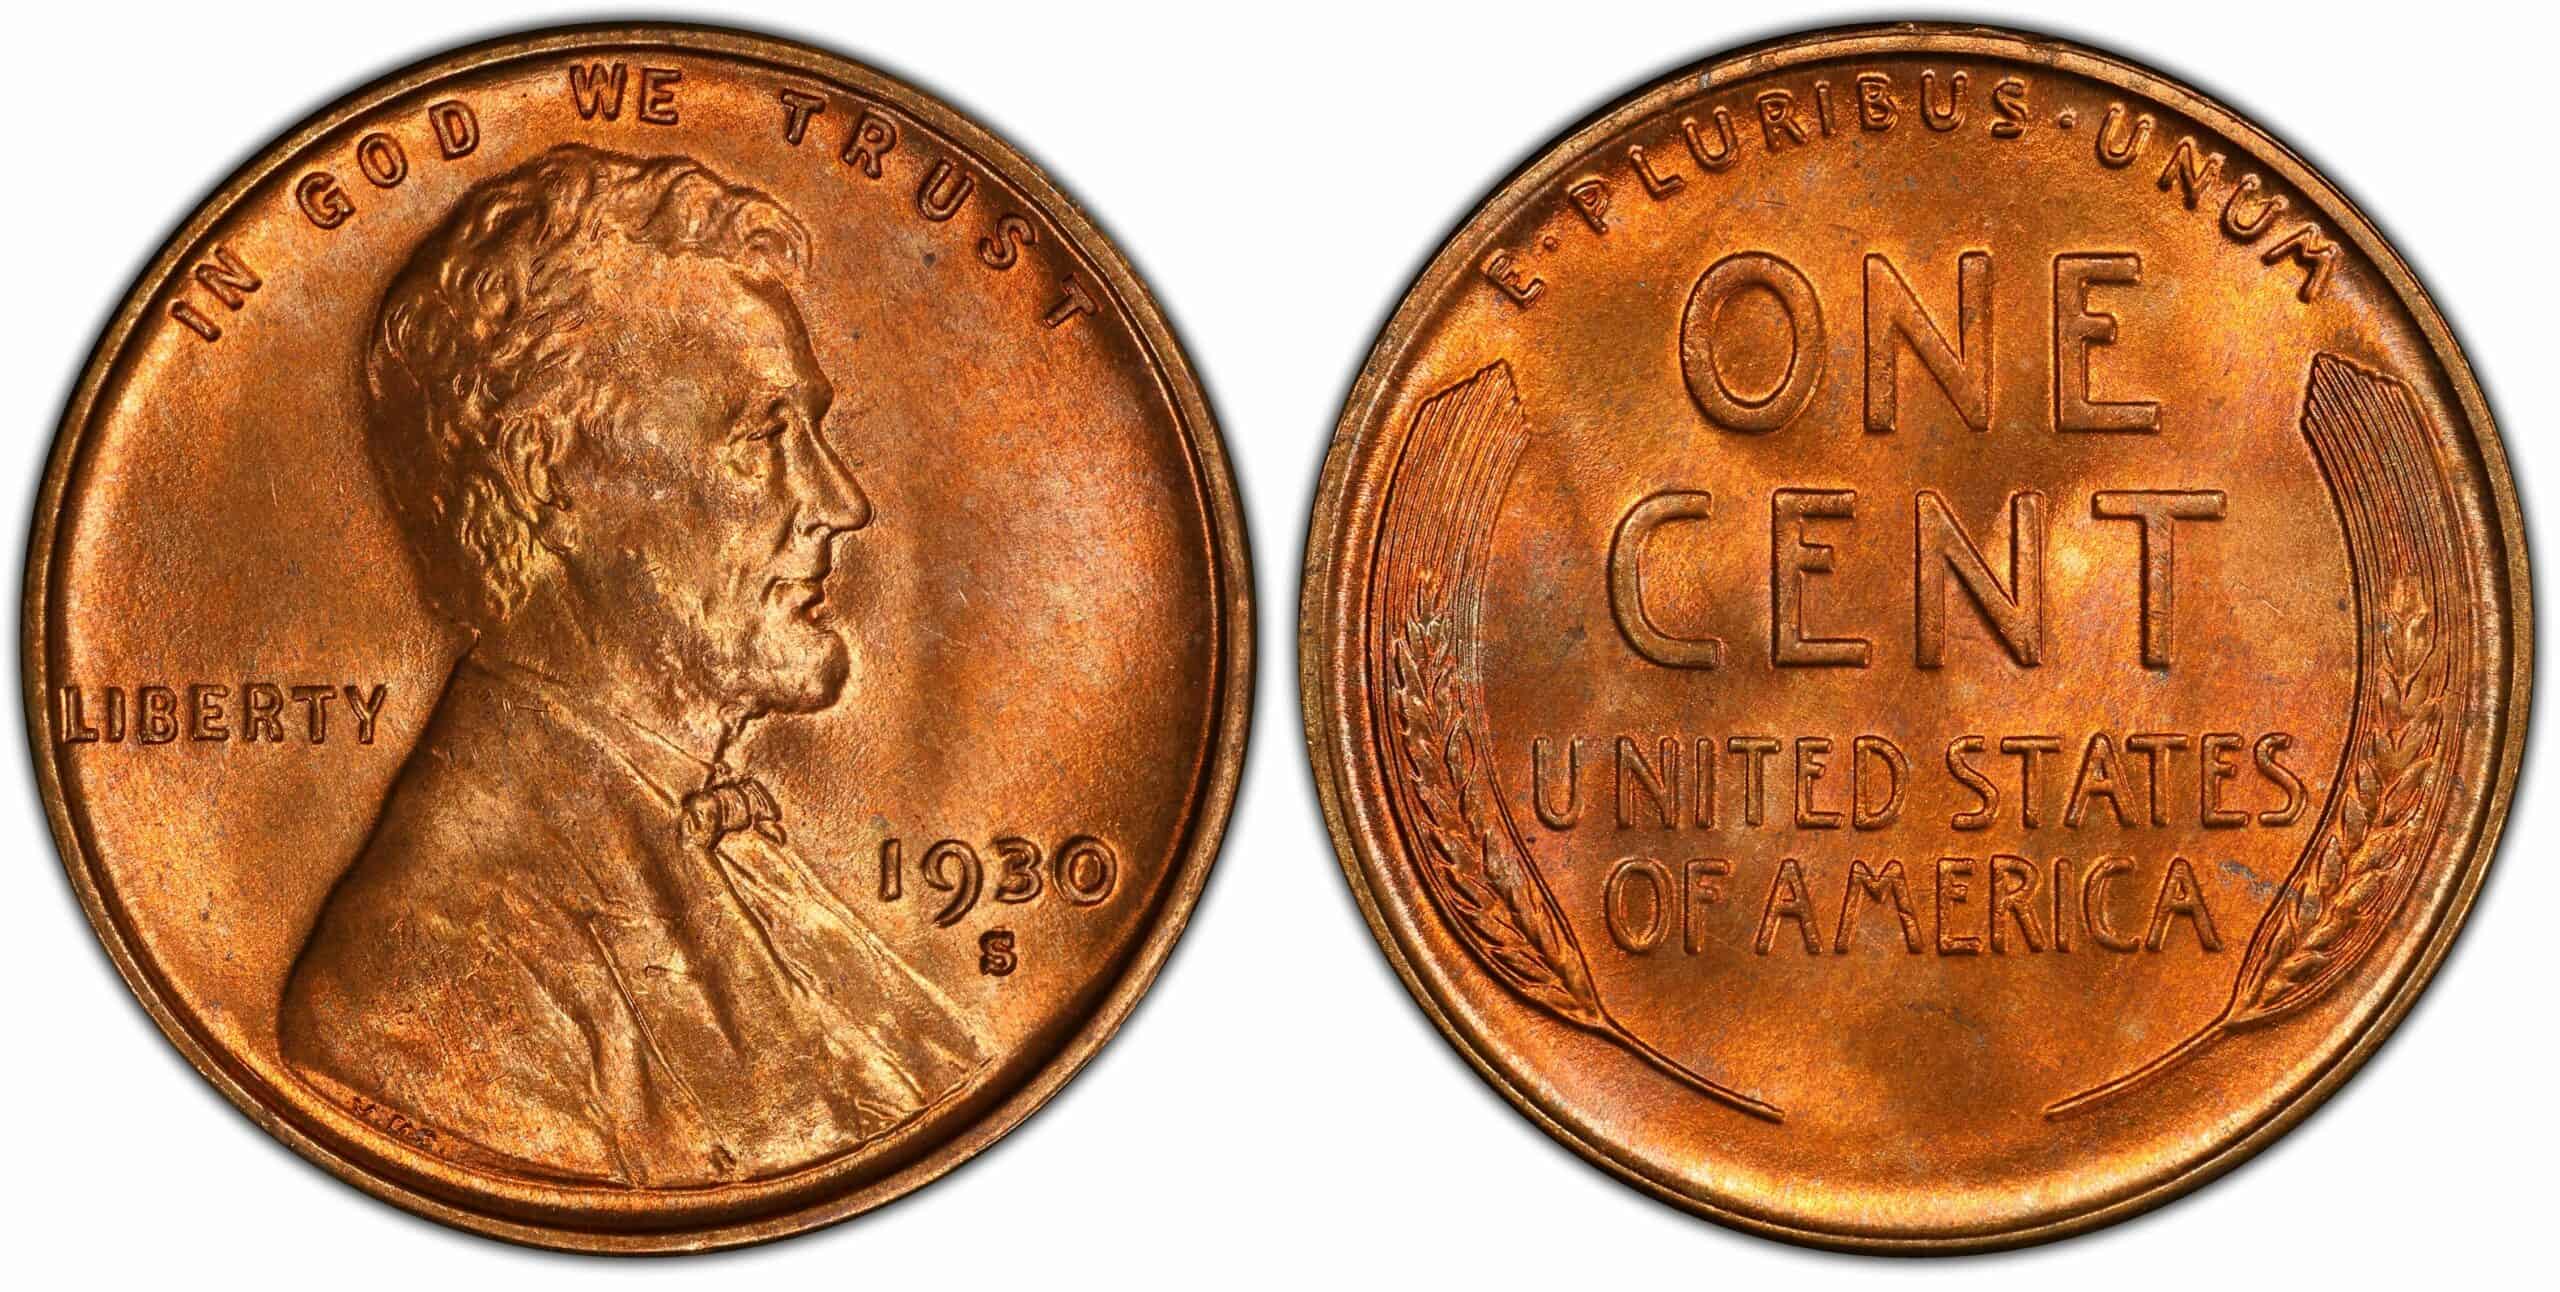 1930 Wheat Penny Value (Rare Errors, “D”, “S” & No Mint Marks)